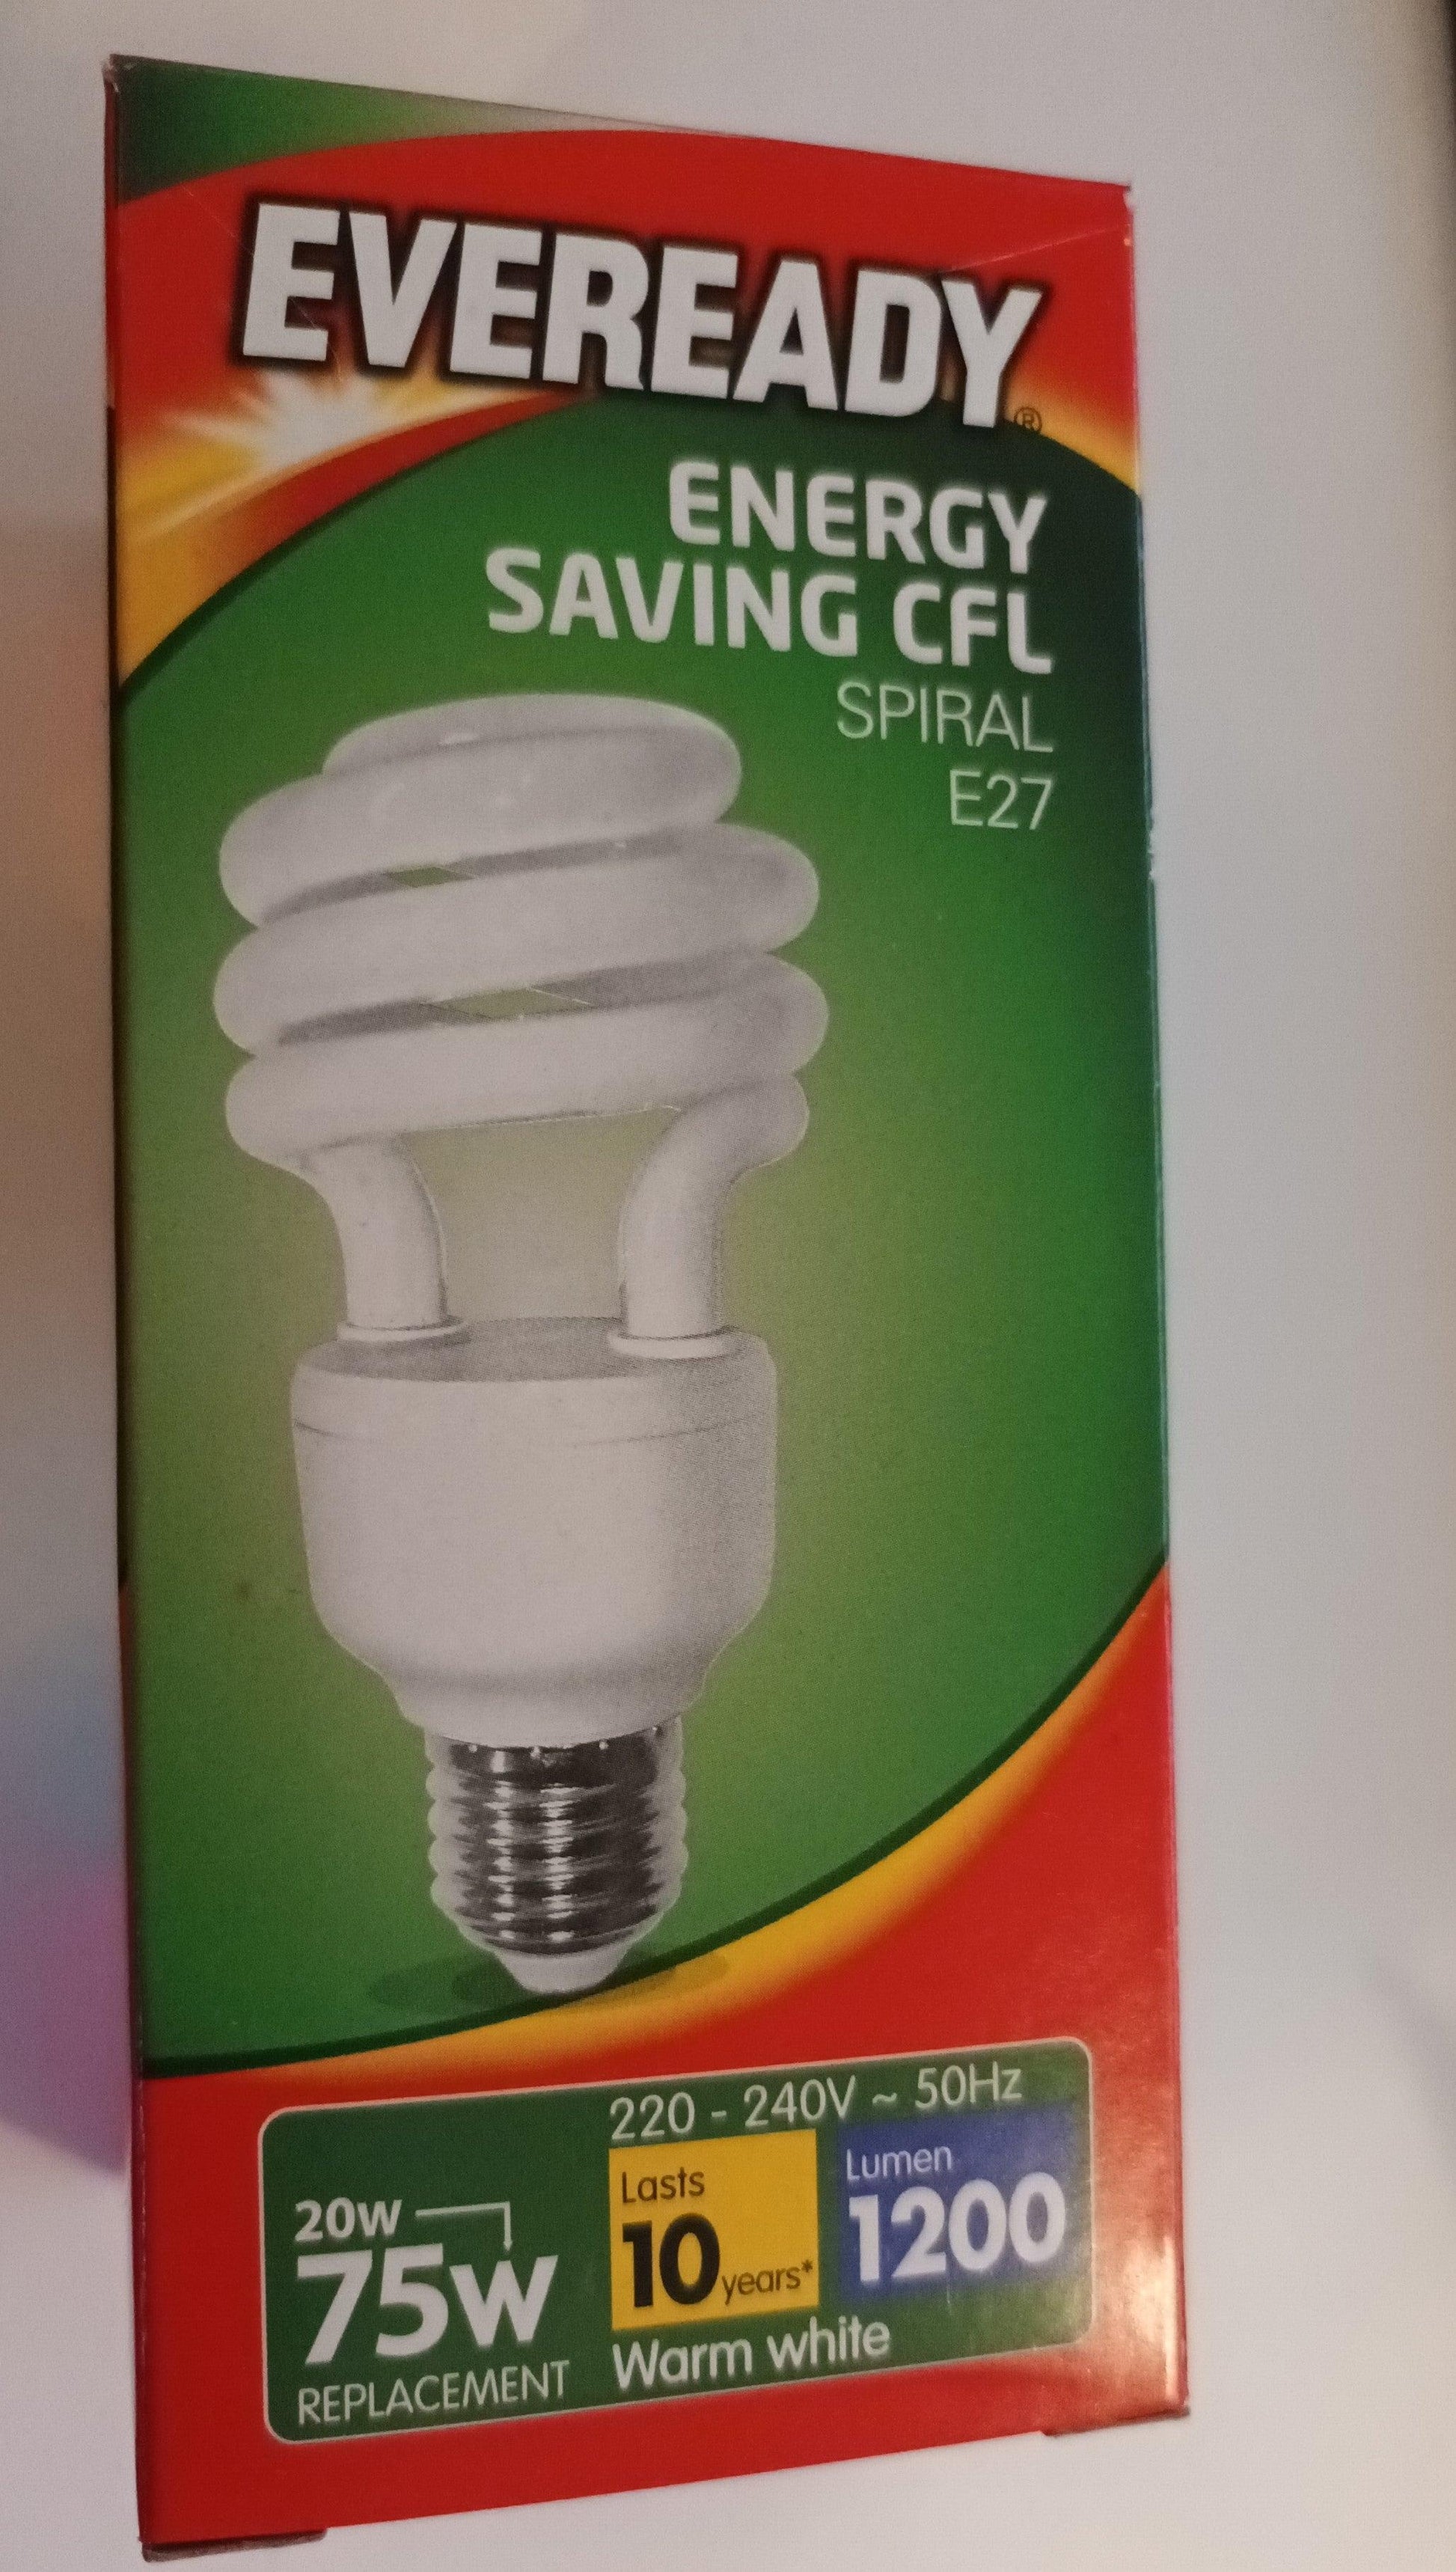 20W Energy Saving CFL Spiral E27 / ES Warm White by Eveready - Beachcomber Lighting